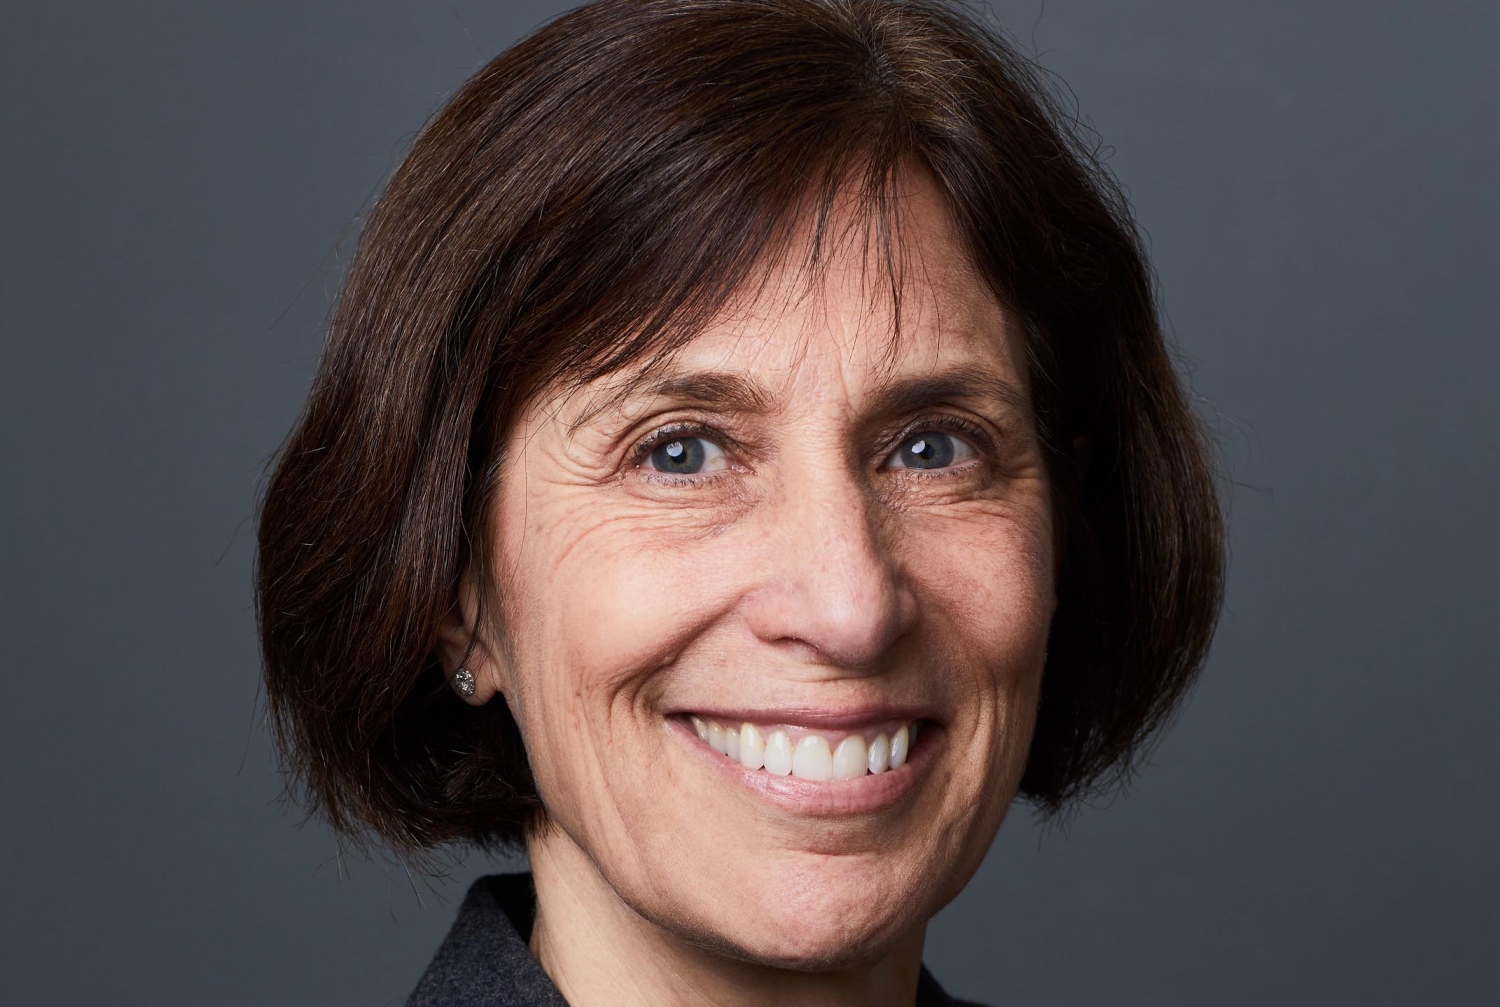 Dr. Linda Gerber, professor of Public Health and professor of epidemiology in Medicine